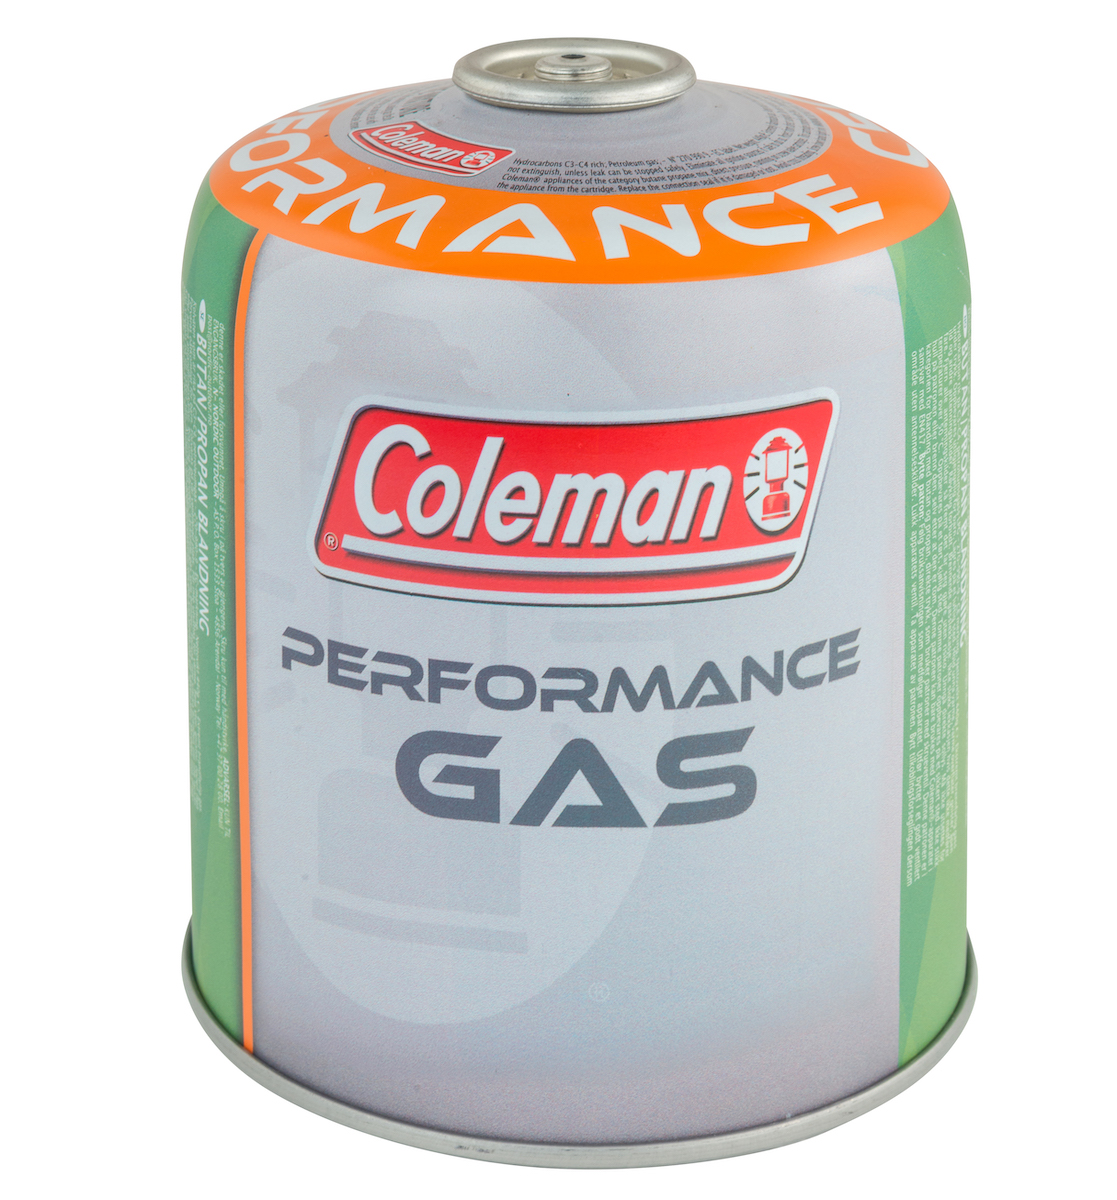 Gas-Ventilkartusche Coleman 500 Performance